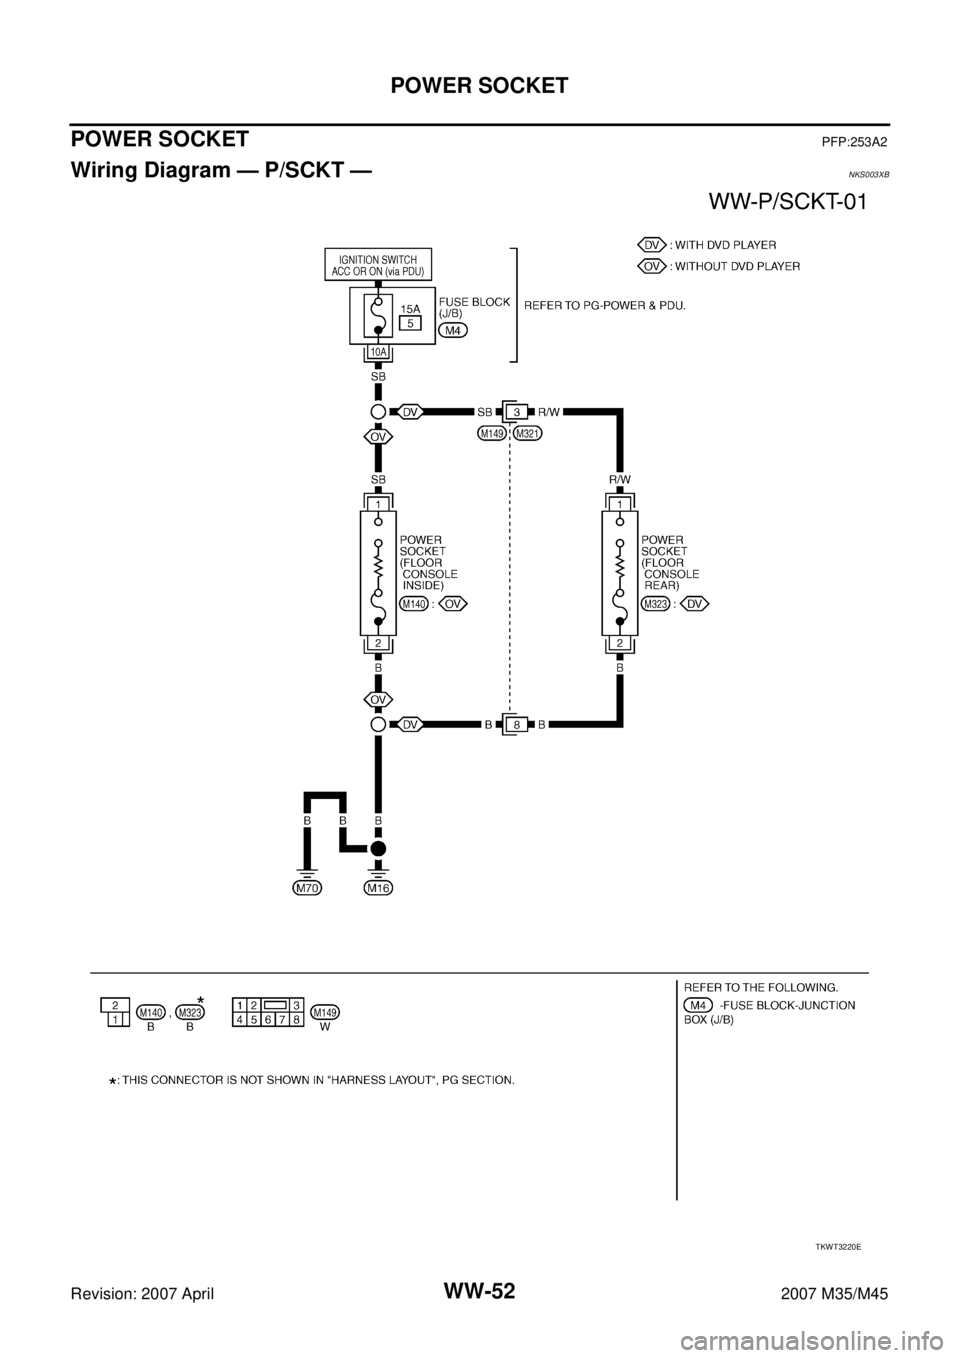 INFINITI M35 2007  Factory Service Manual WW-52
POWER SOCKET
Revision: 2007 April2007 M35/M45
POWER SOCKETPFP:253A2
Wiring Diagram — P/SCKT —NKS003XB
TKWT3220E 